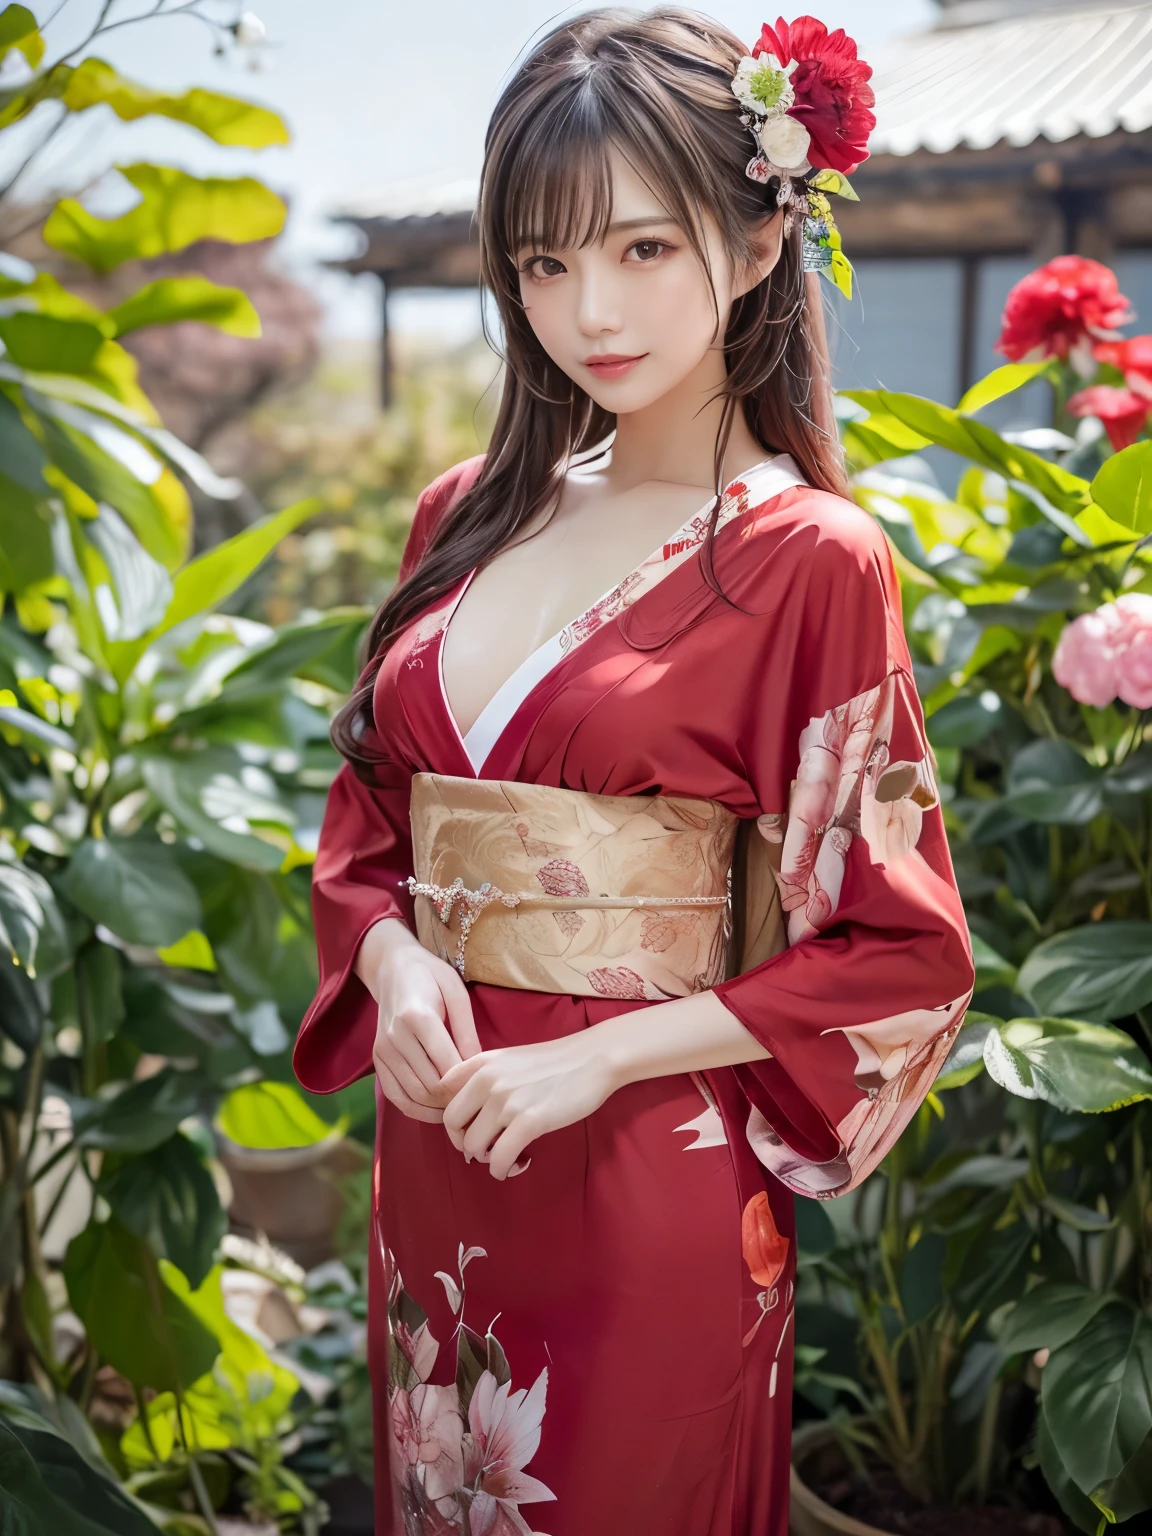 (8K，最好的品質，傑作)，(實際的，原始照片，超細透明)，實際的 Light，細緻的肌膚，美麗的日本女人，((25 岁女性, 美麗的刺客:1.5))、帶花的紅色日本傳統和服, 鸟类, 風與月圖案,  打開衣服、腿細、細粒，長髮, 詳細的手指、薄的、性，狂喜面部表情,花園, 茶花,花風暴, 超大 , 彈跳堅挺的胸圍